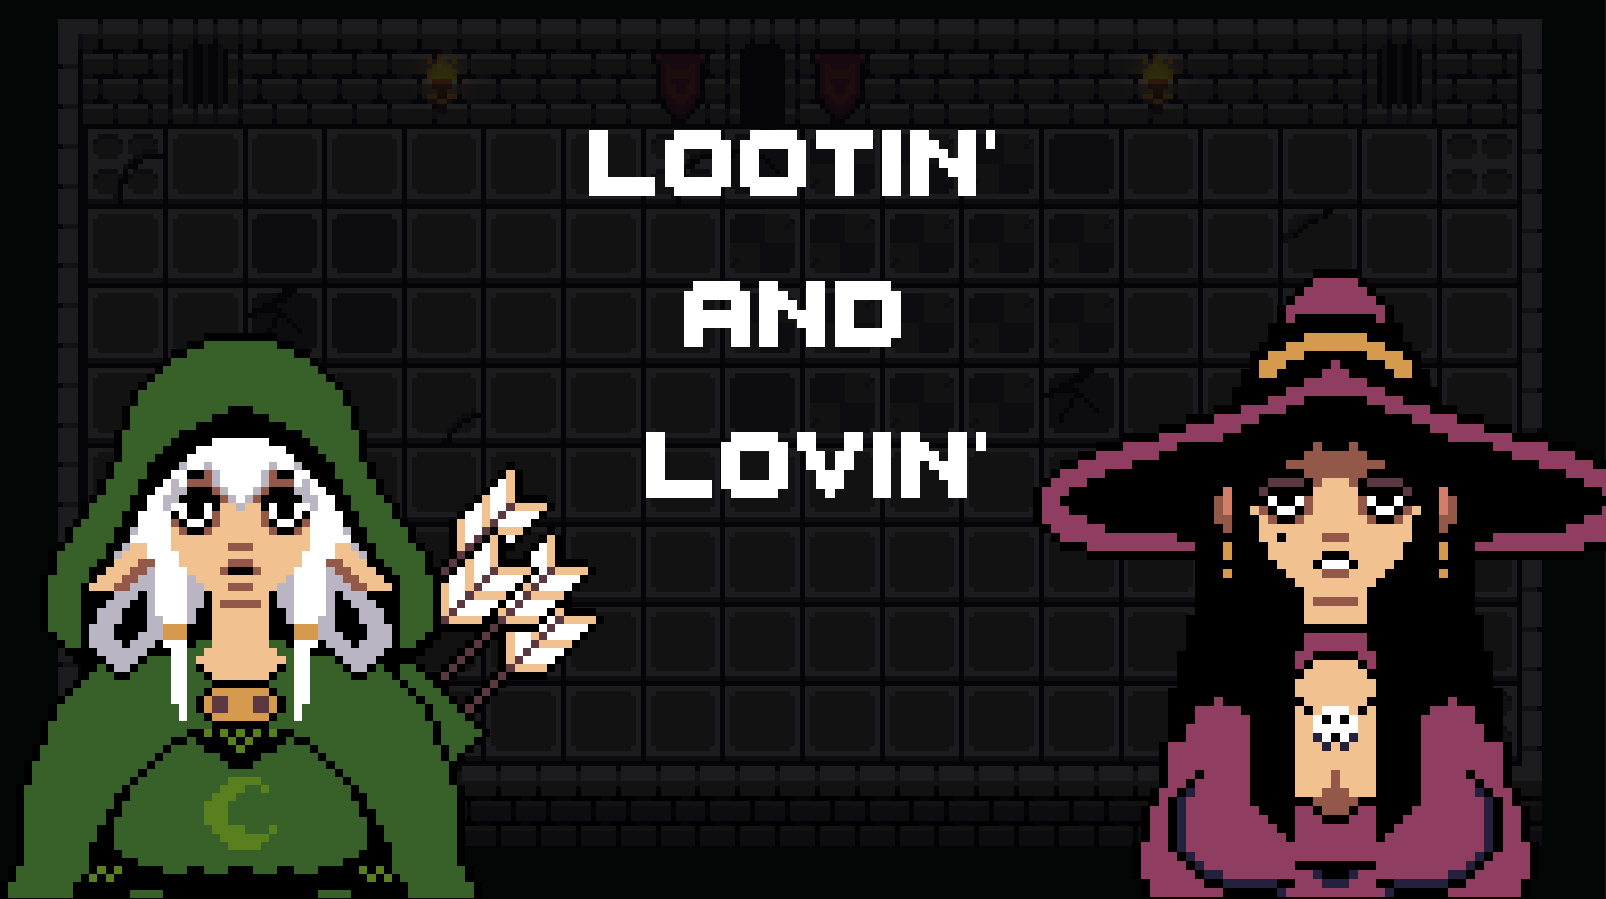 Lootin' and Lovin'